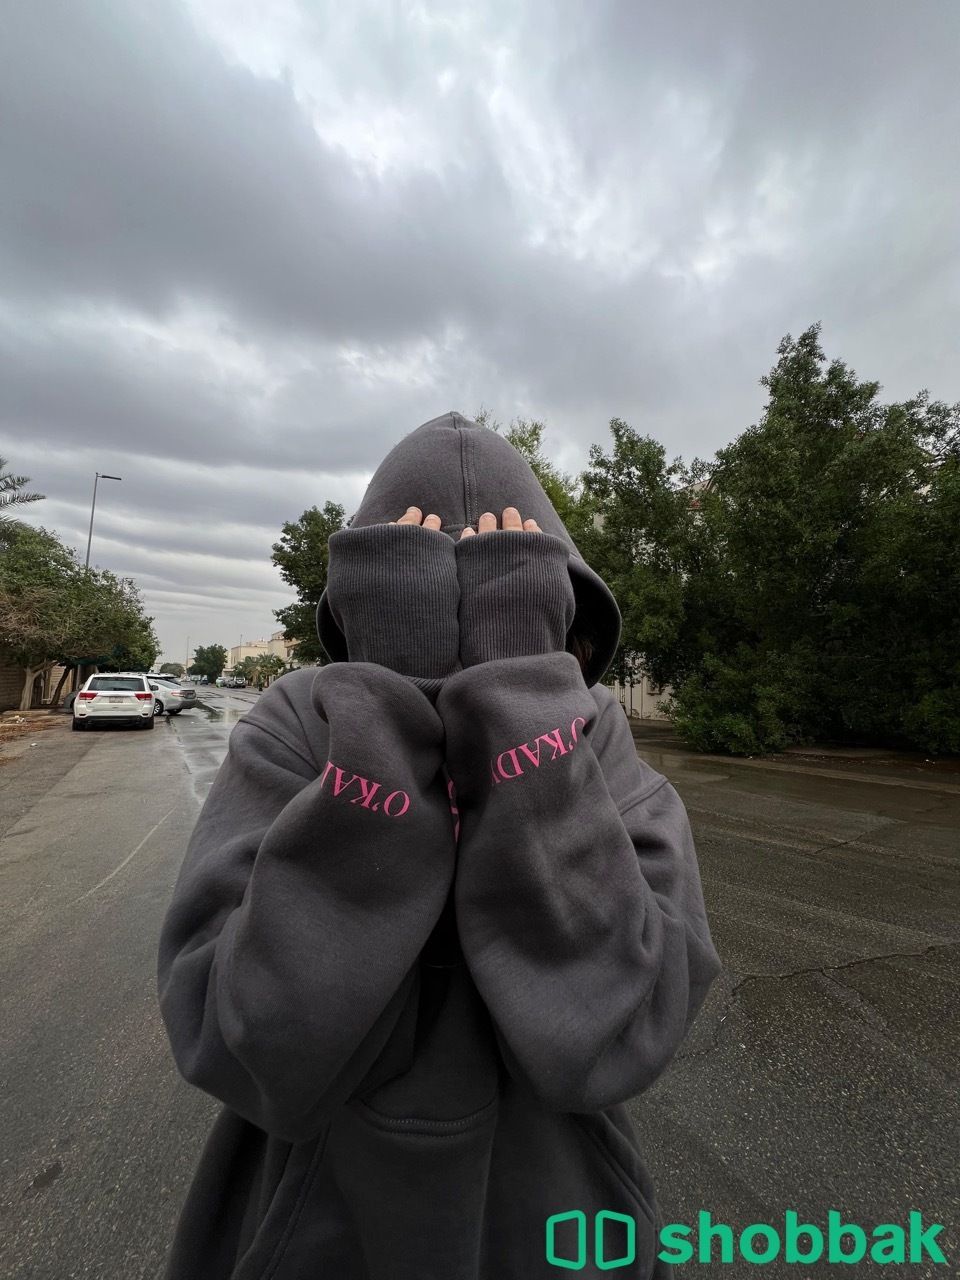  CLOUD NINE O’KADY hoodie  Shobbak Saudi Arabia